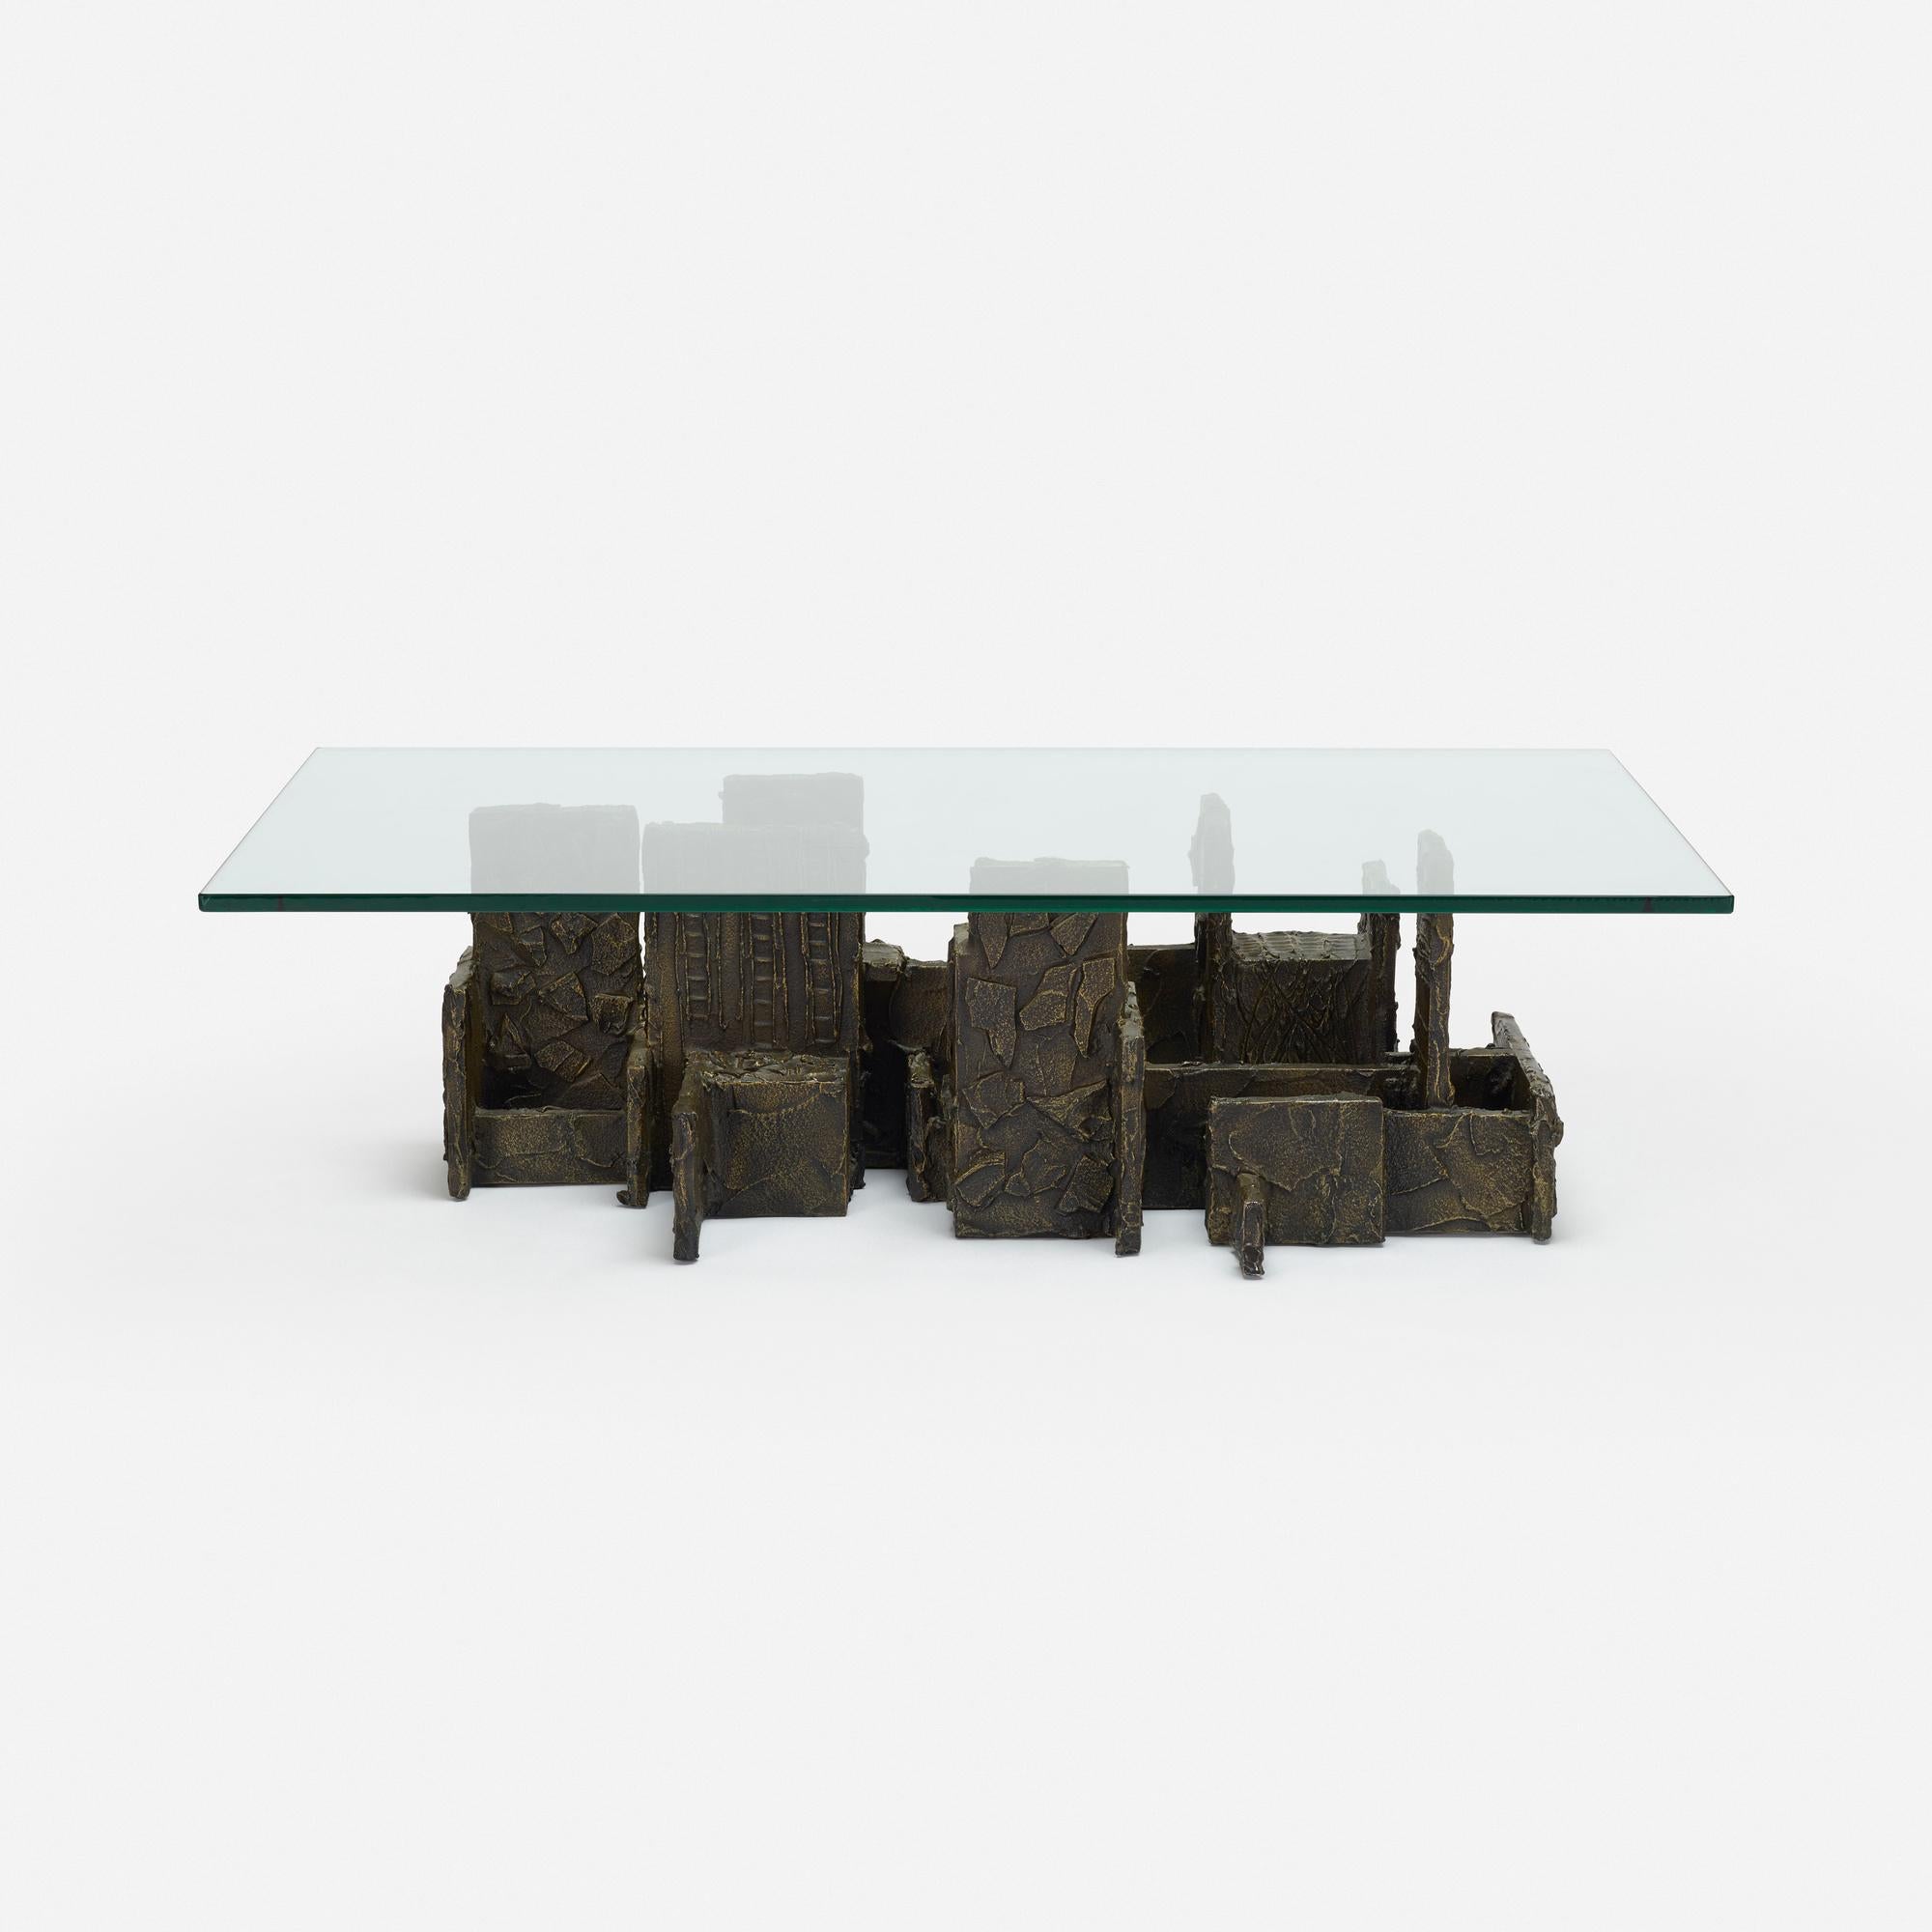 Rare coffee table model PE-131 by renowned furniture designer Paul Evans. This unique 